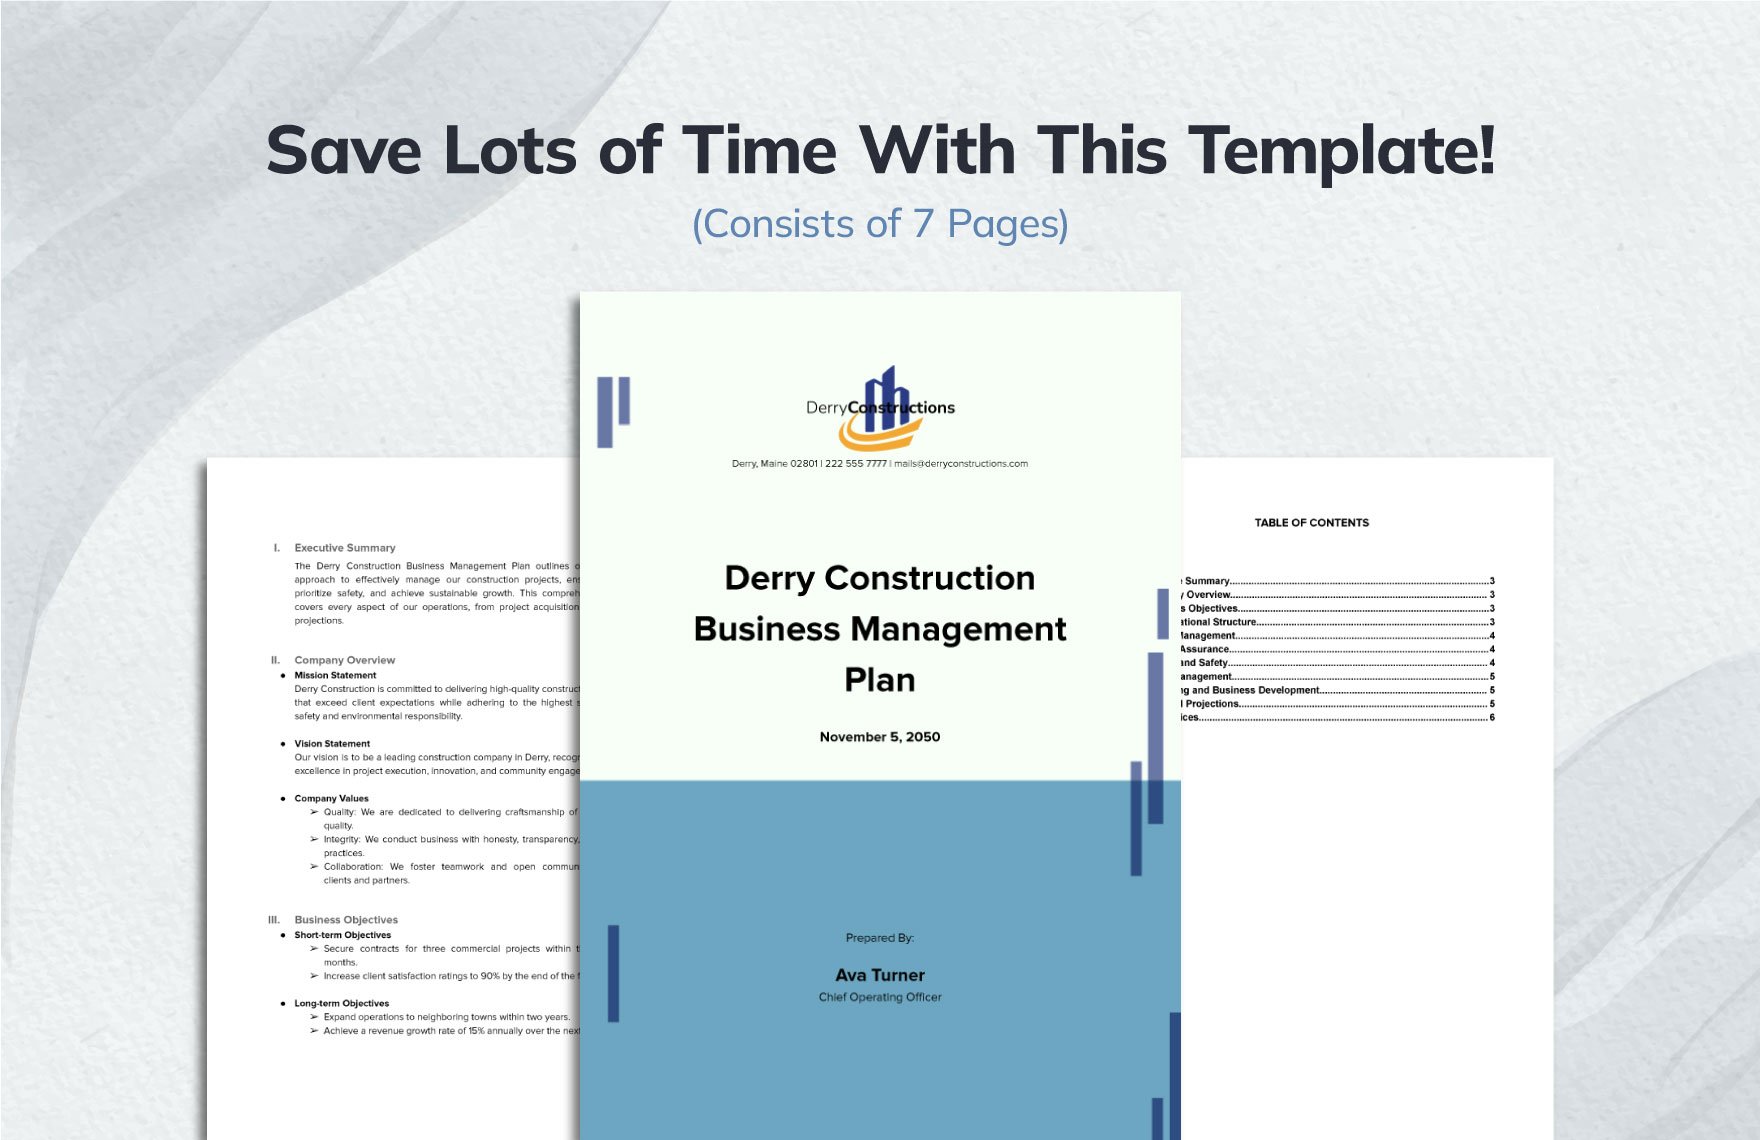 Simple Construction Business Management Plan Template